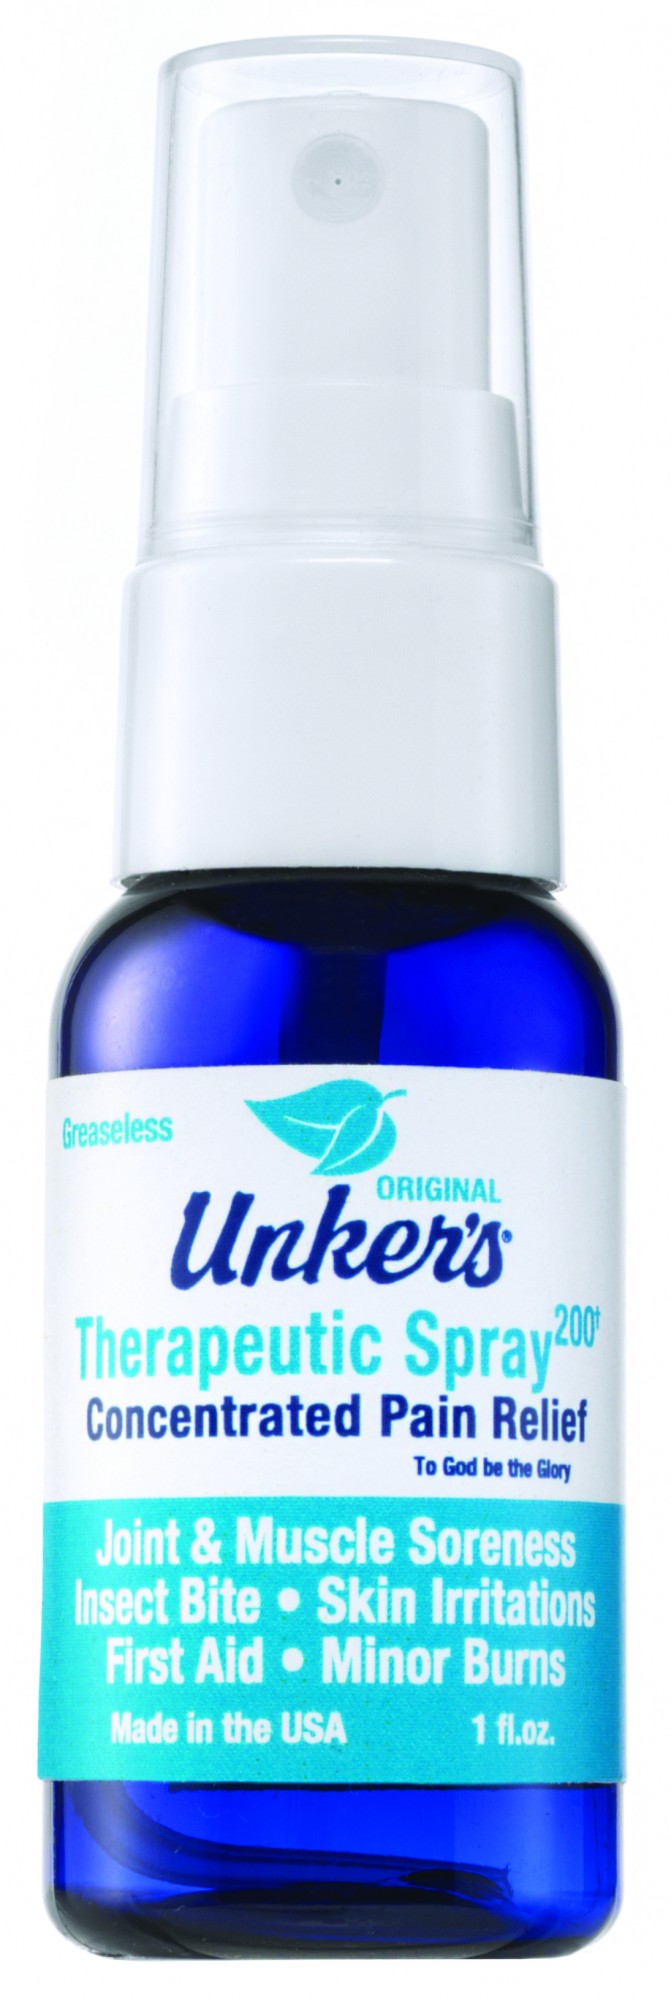 Unker's Therapeutic Spray